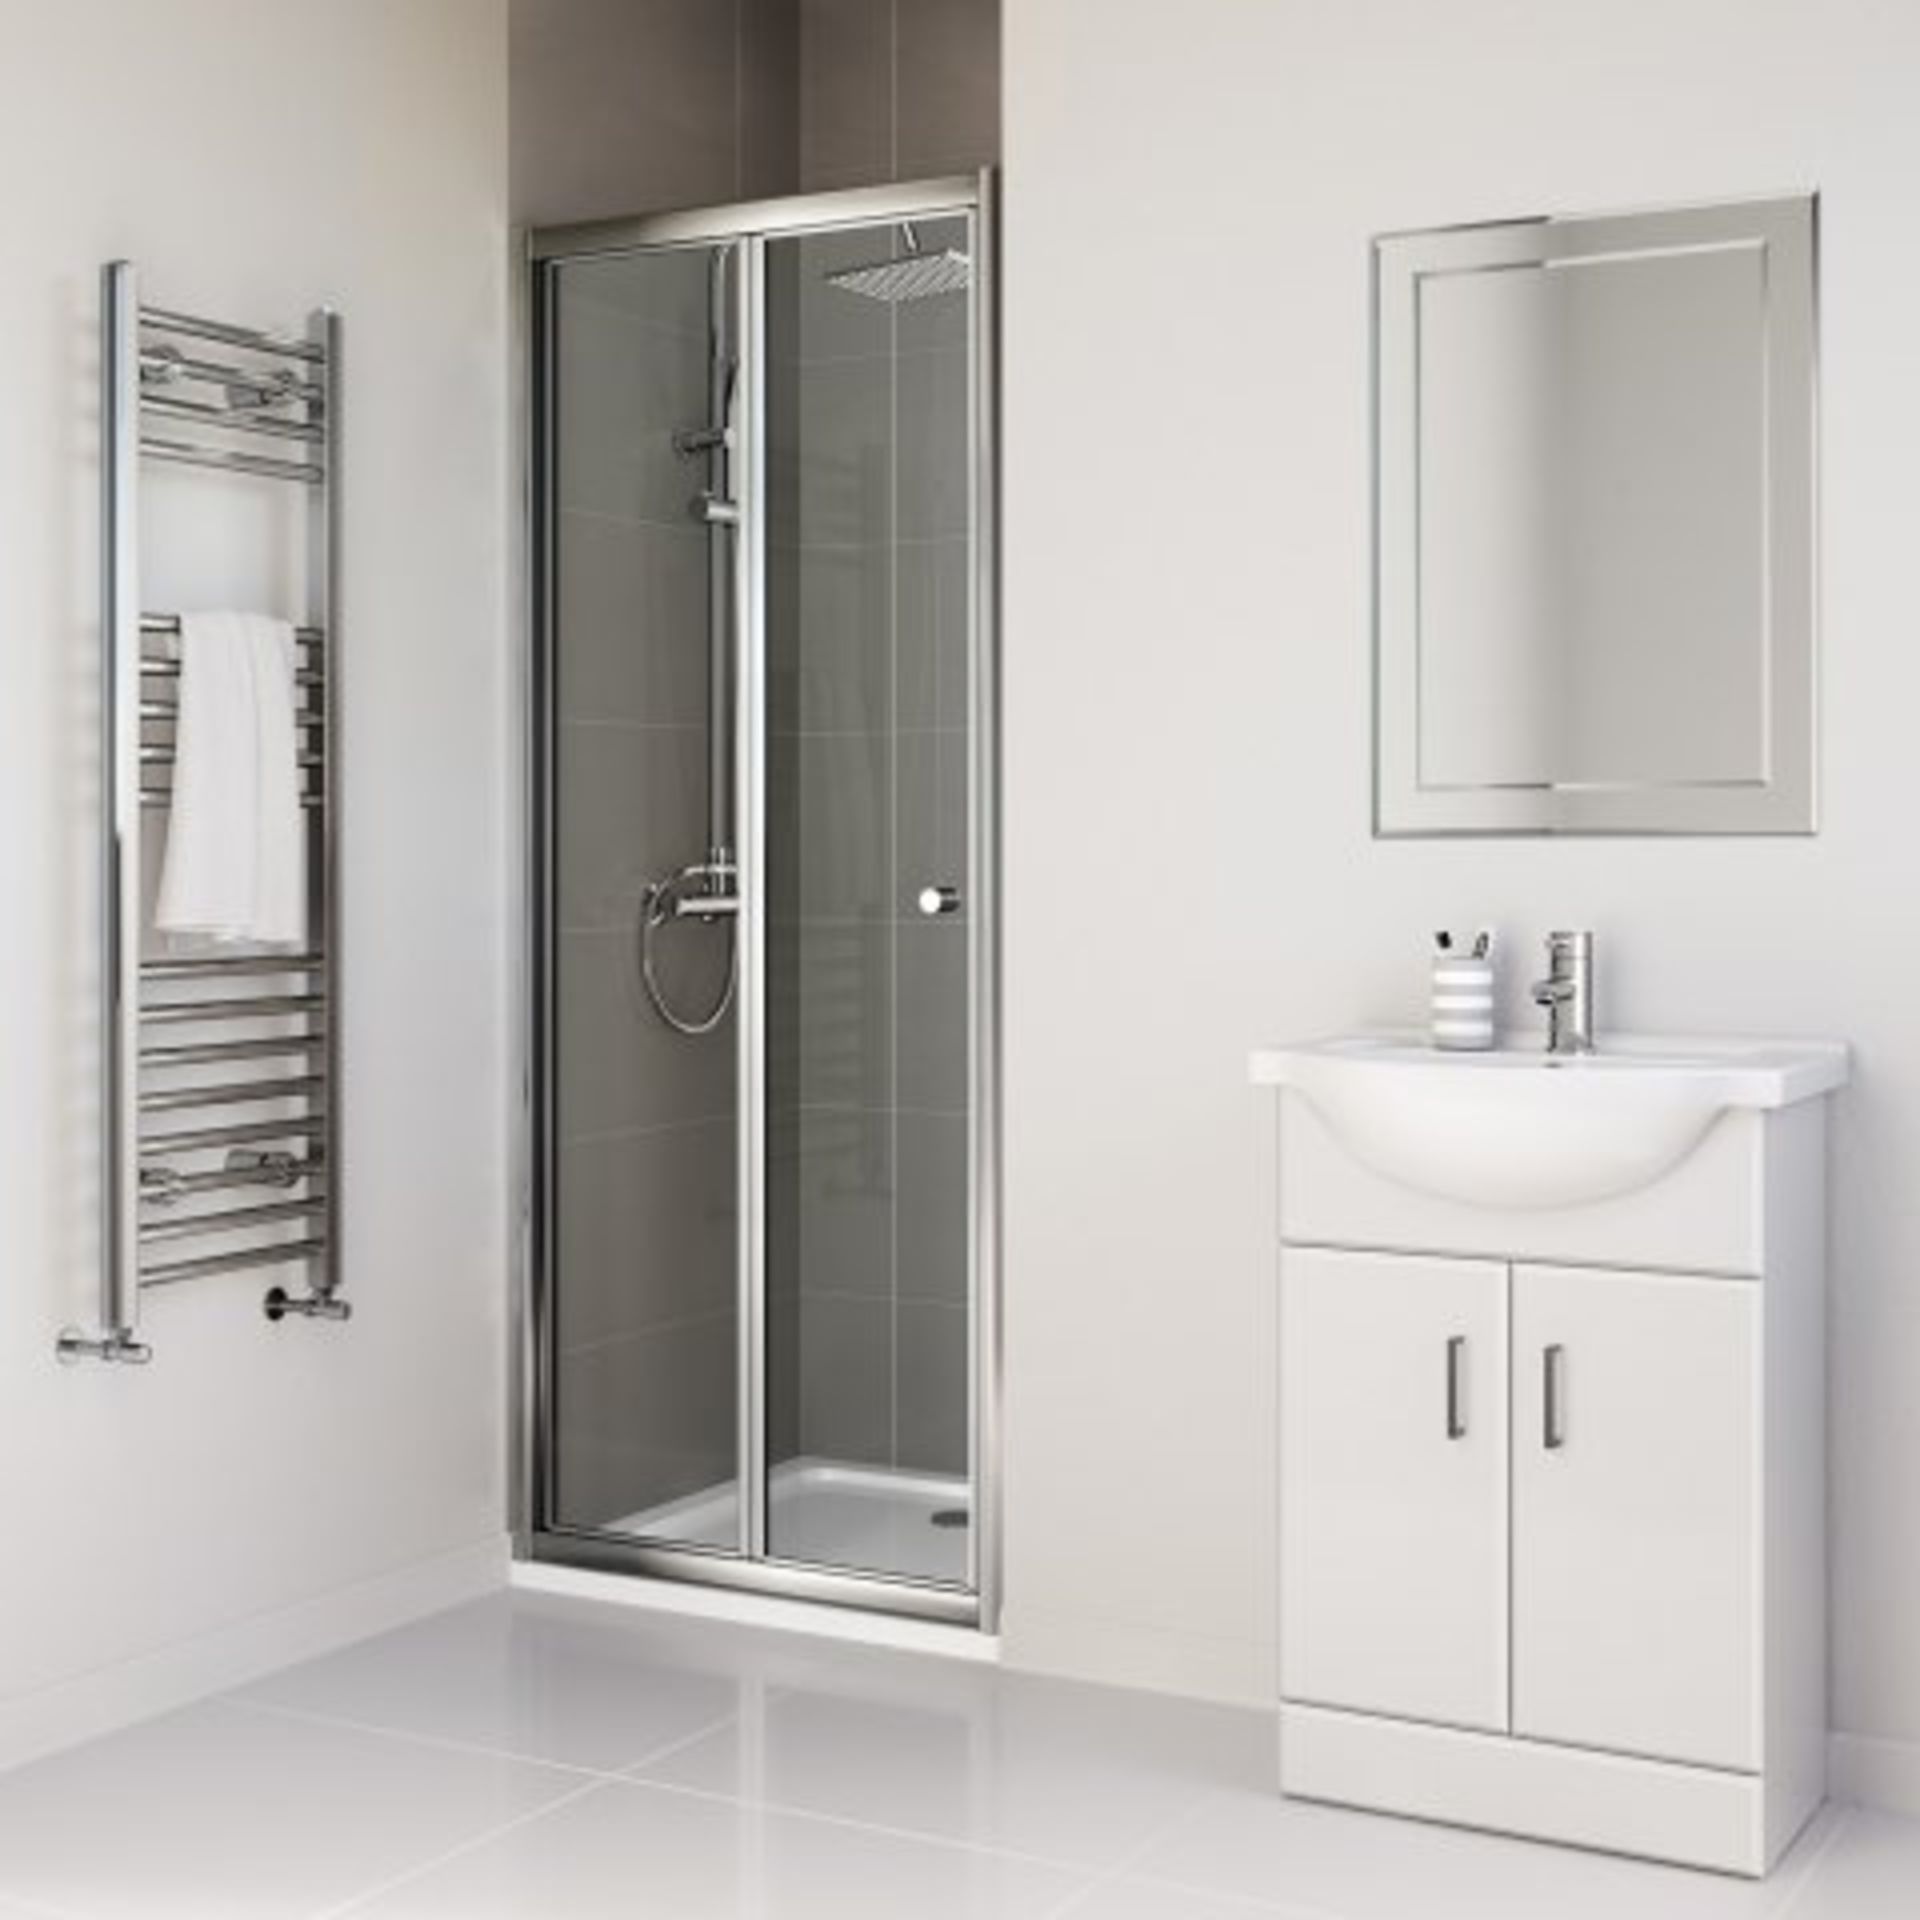 (N119) 900mm - Elements Bi Fold Shower Door. RRP £299.99. Budget Solution Our entry level range of - Image 3 of 3